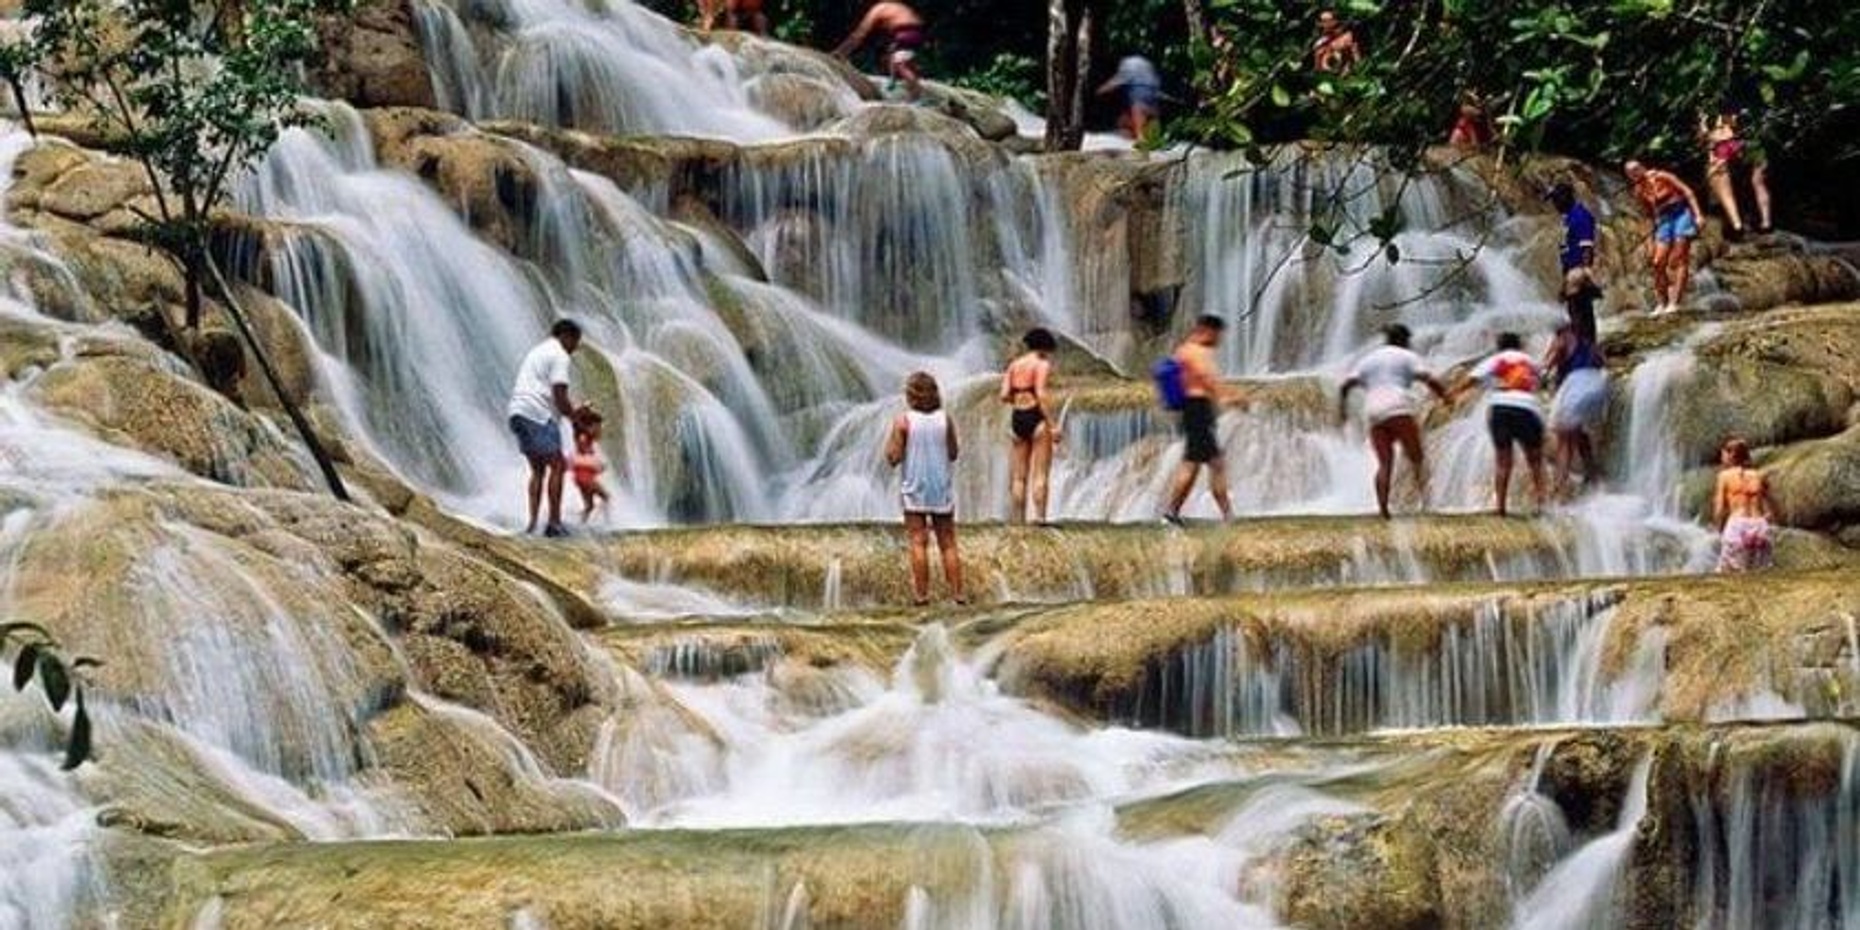 Dunn's River Falls and Zipline in Jamaica